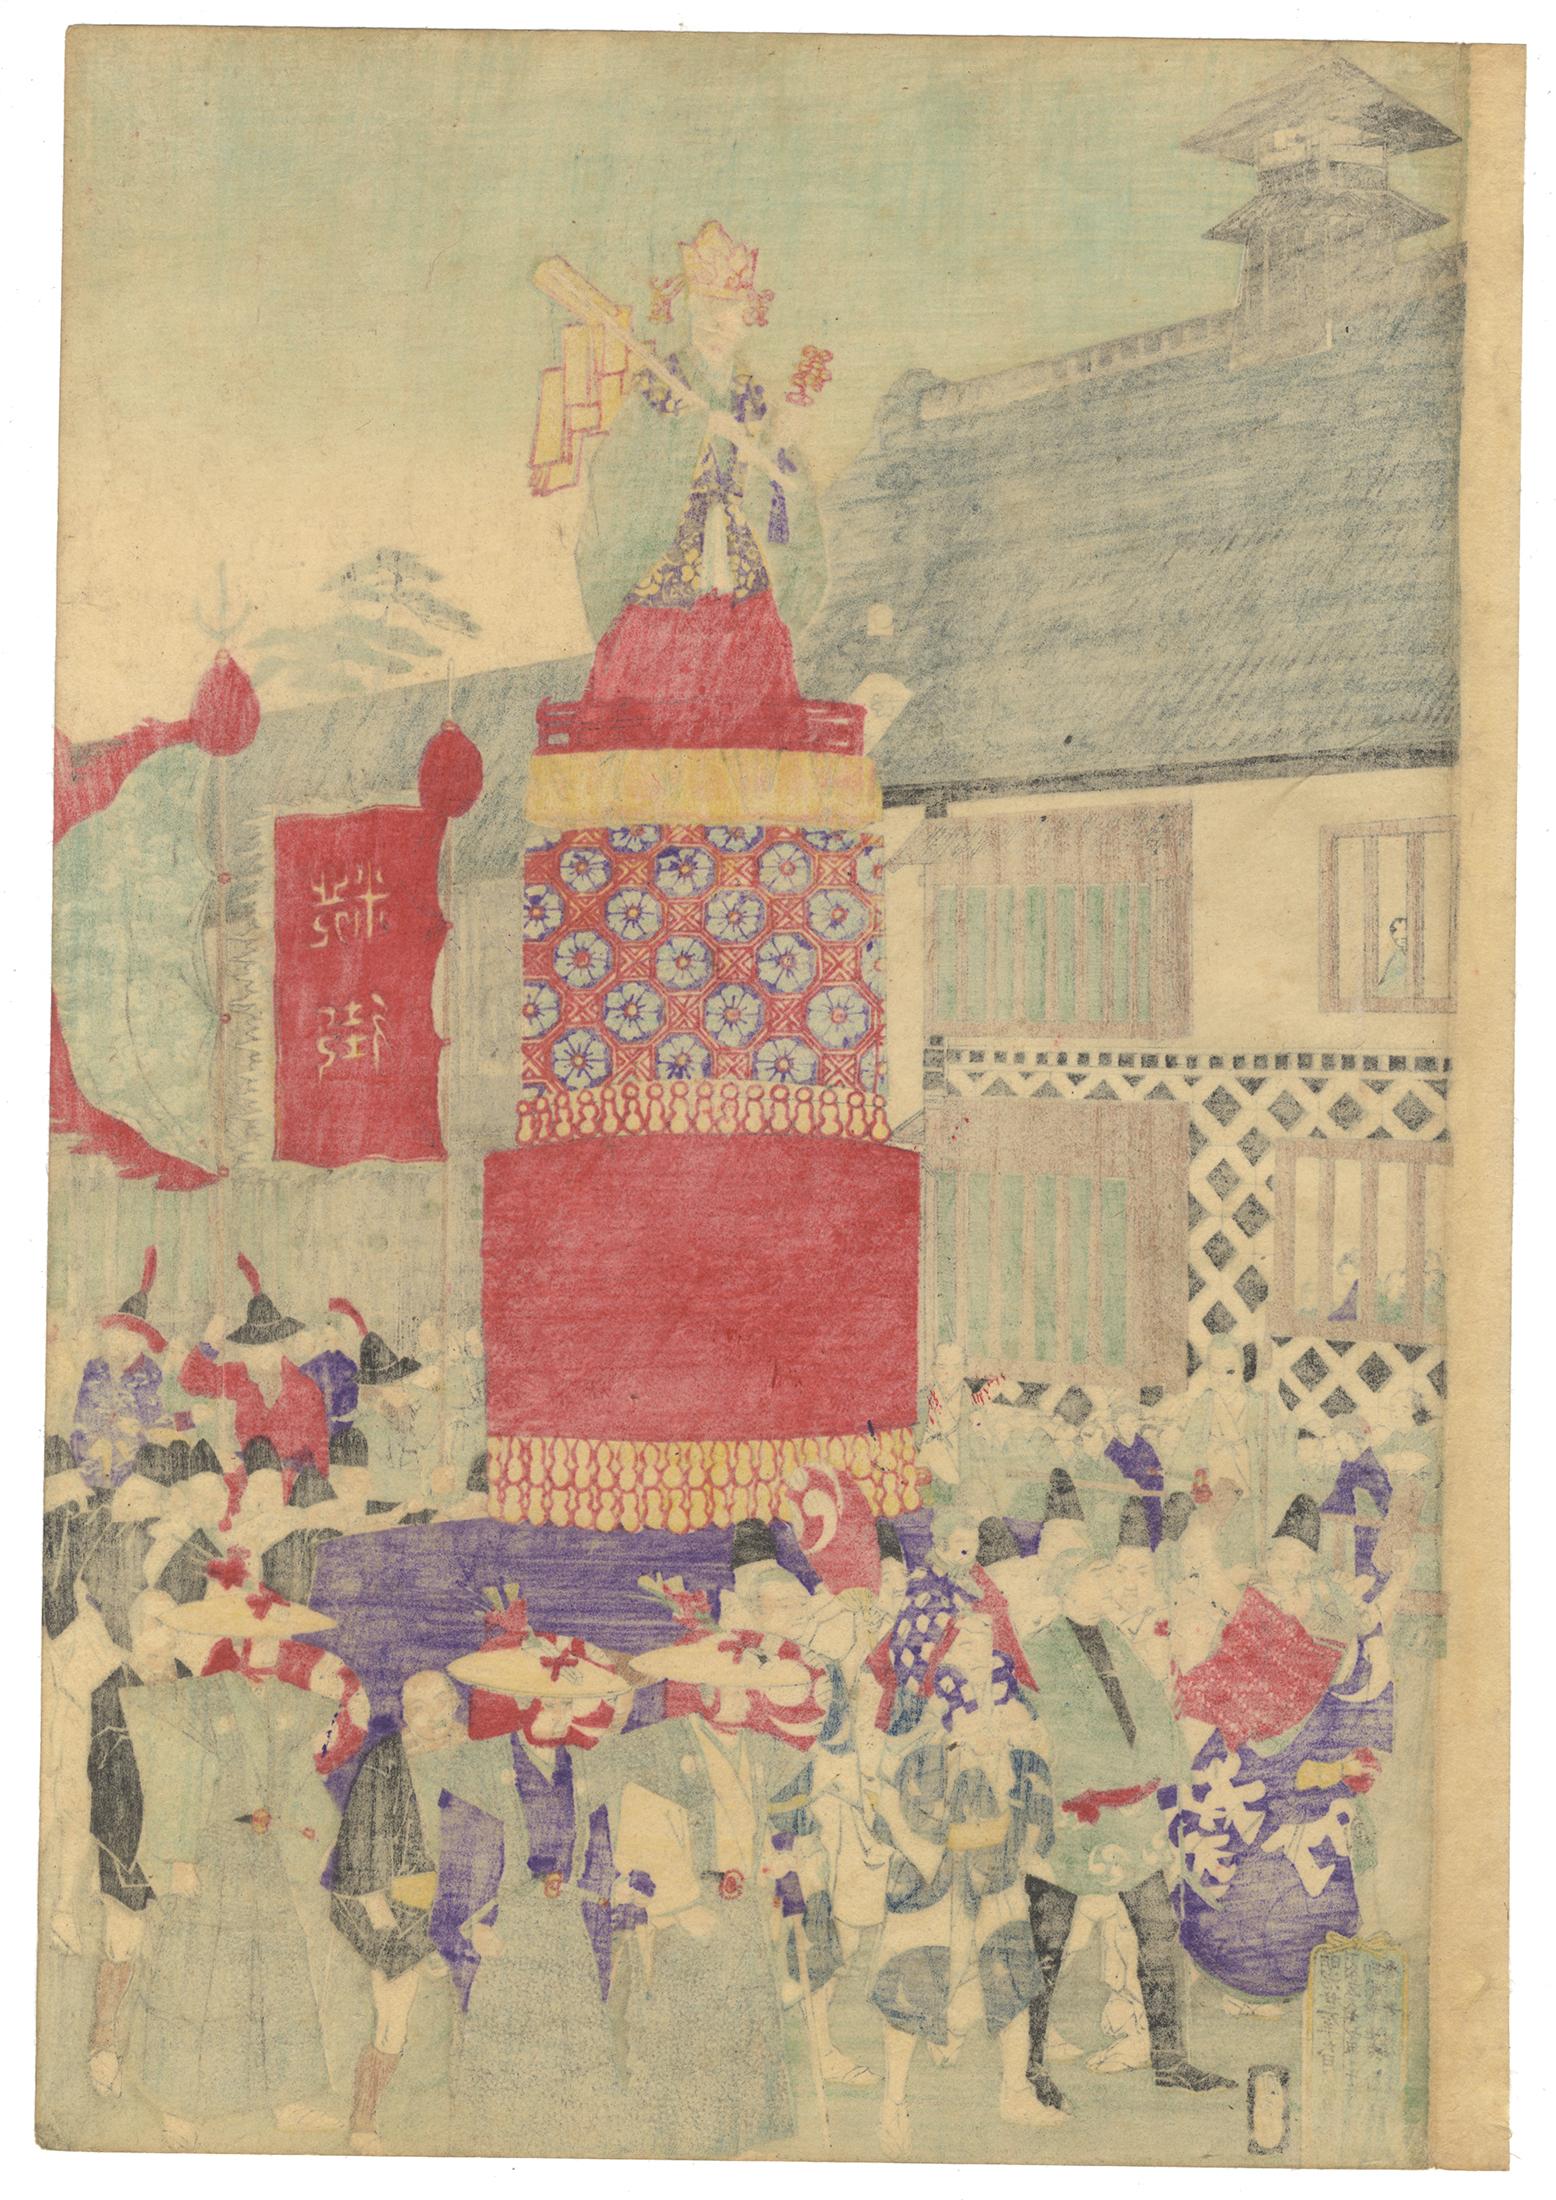 Artist: Chikanobu Yoshu (1838-1912)
Title: June - Sannō Festival
Series: Customs of Edo Throughout Twelve Months 
Publisher: Yokoyama Ryohachi
Date: 1889
Dimensions: (L) 24.7 x 35.5 (C) 23.3 x 35.5 (R) 24.3 x 35.5 cm
Condition: Slightly trimmed.